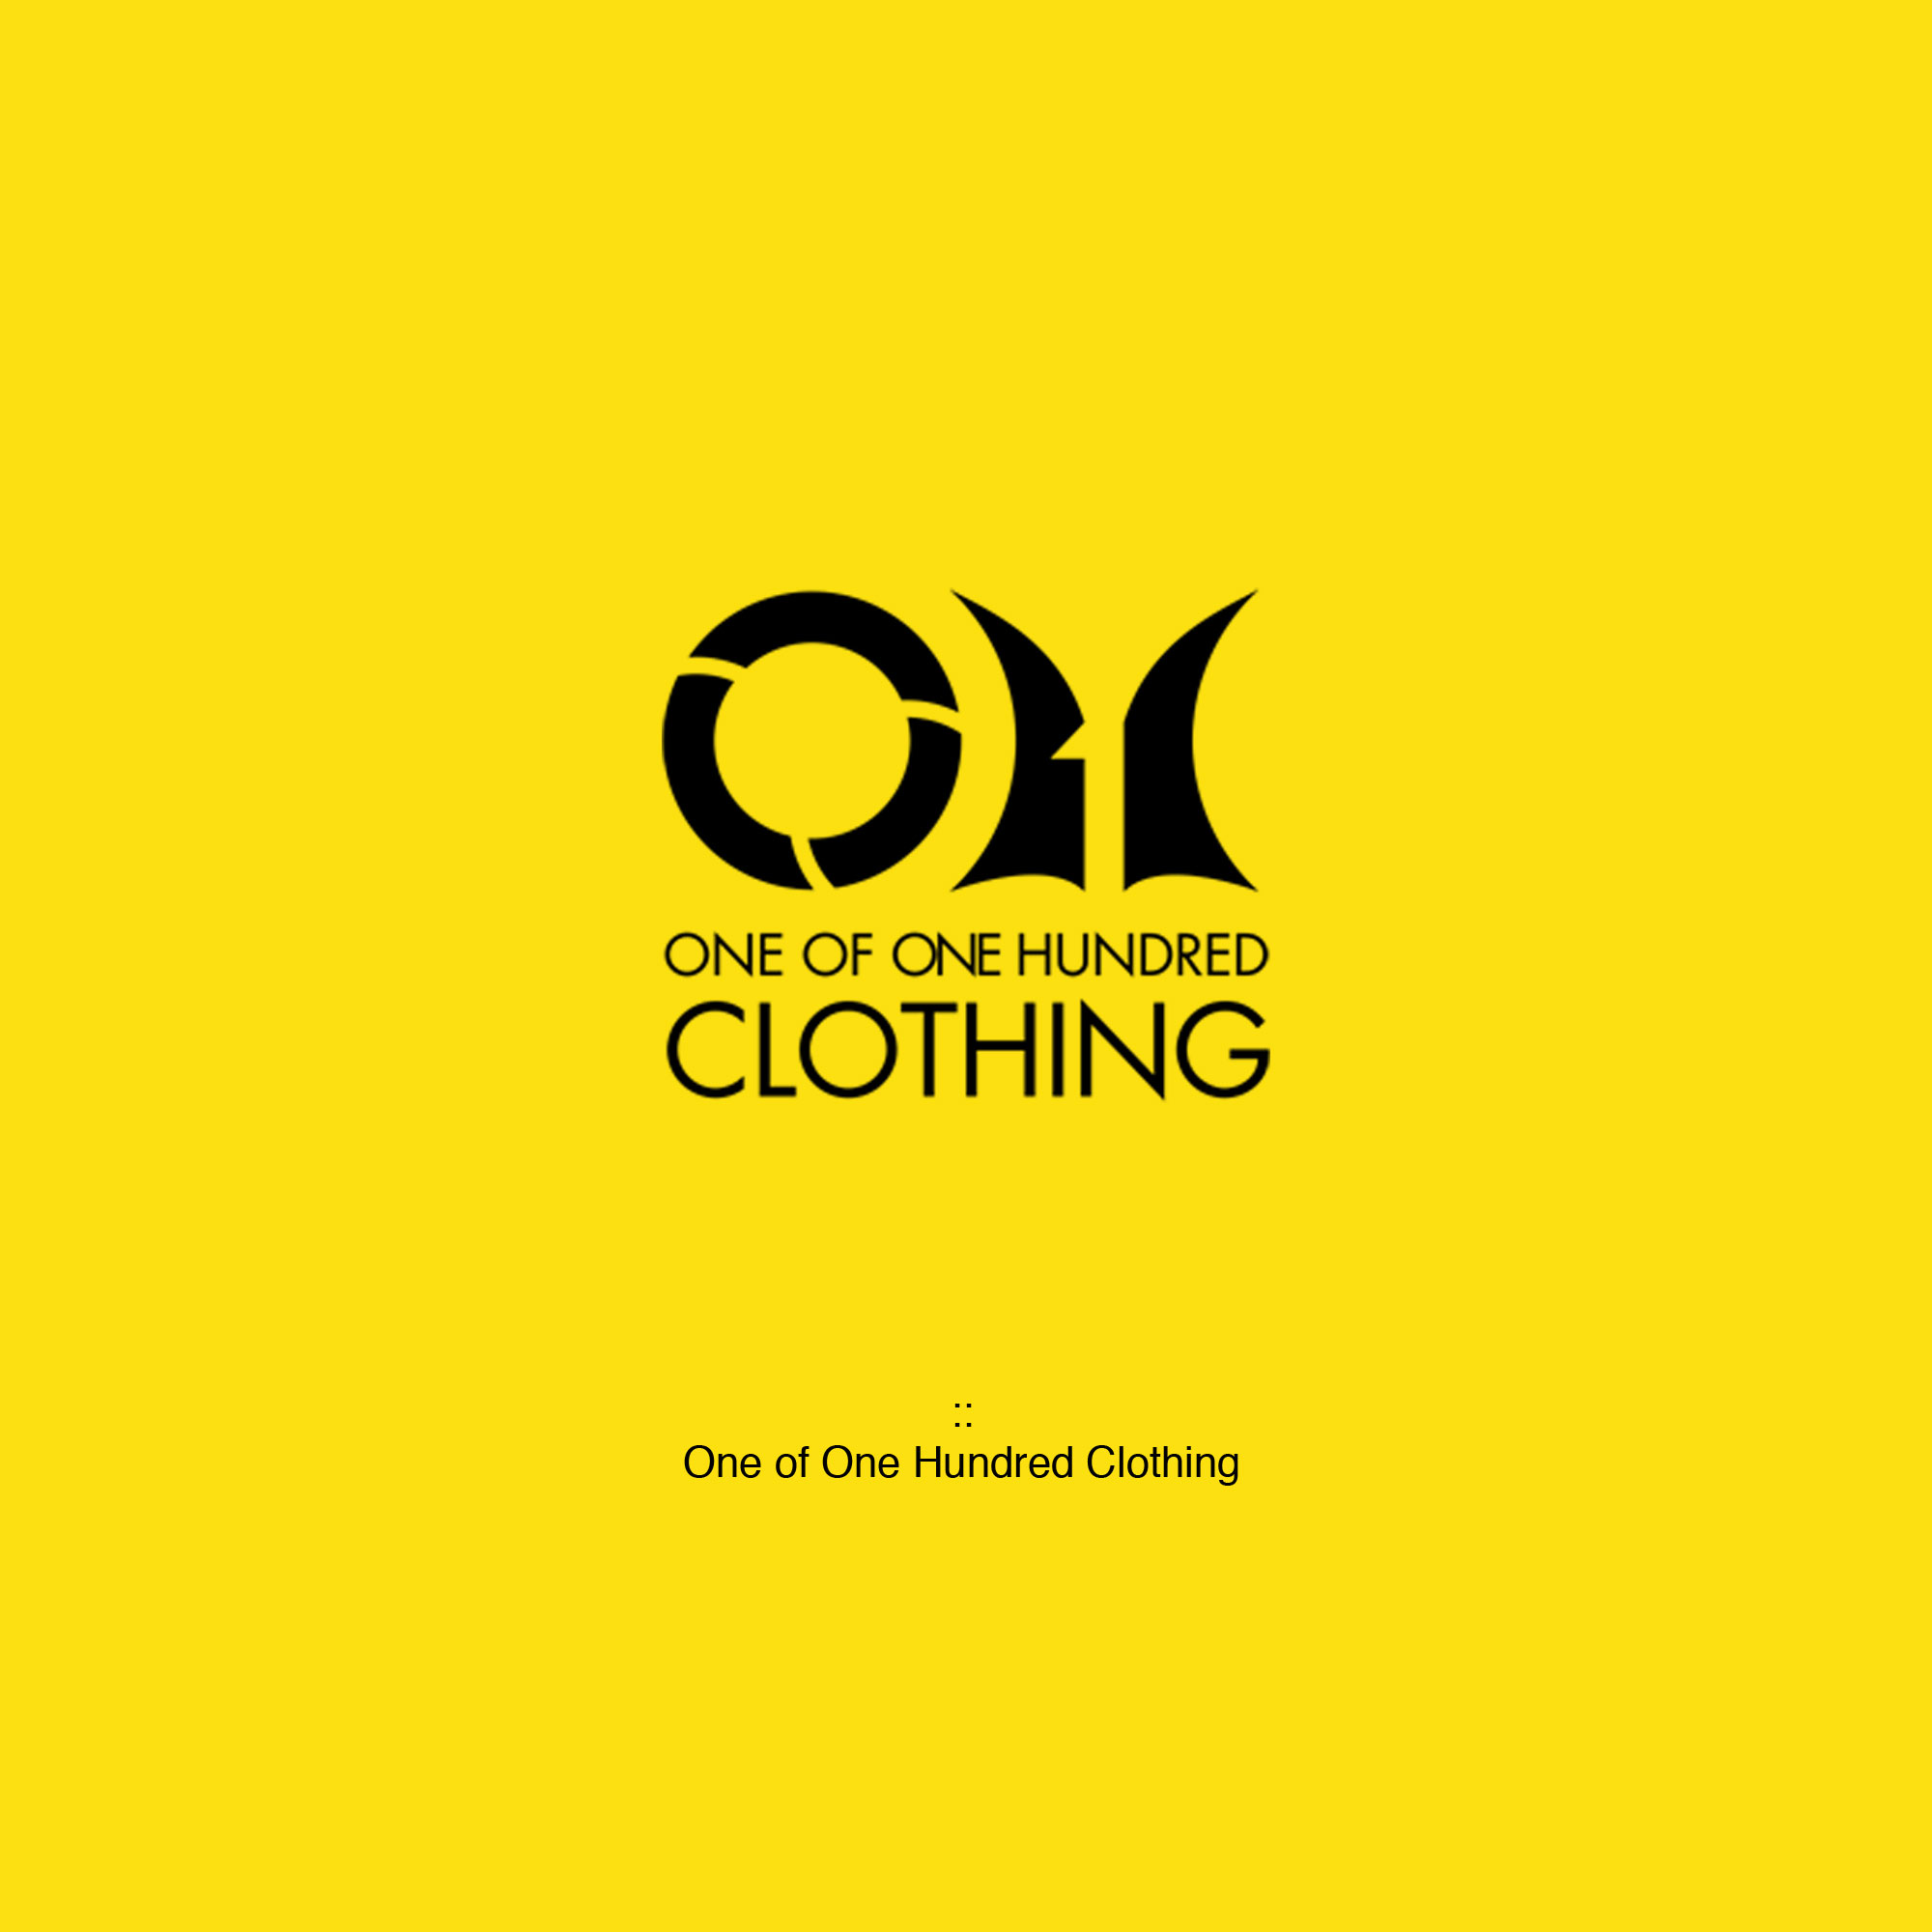 One of One Hundred Clothing